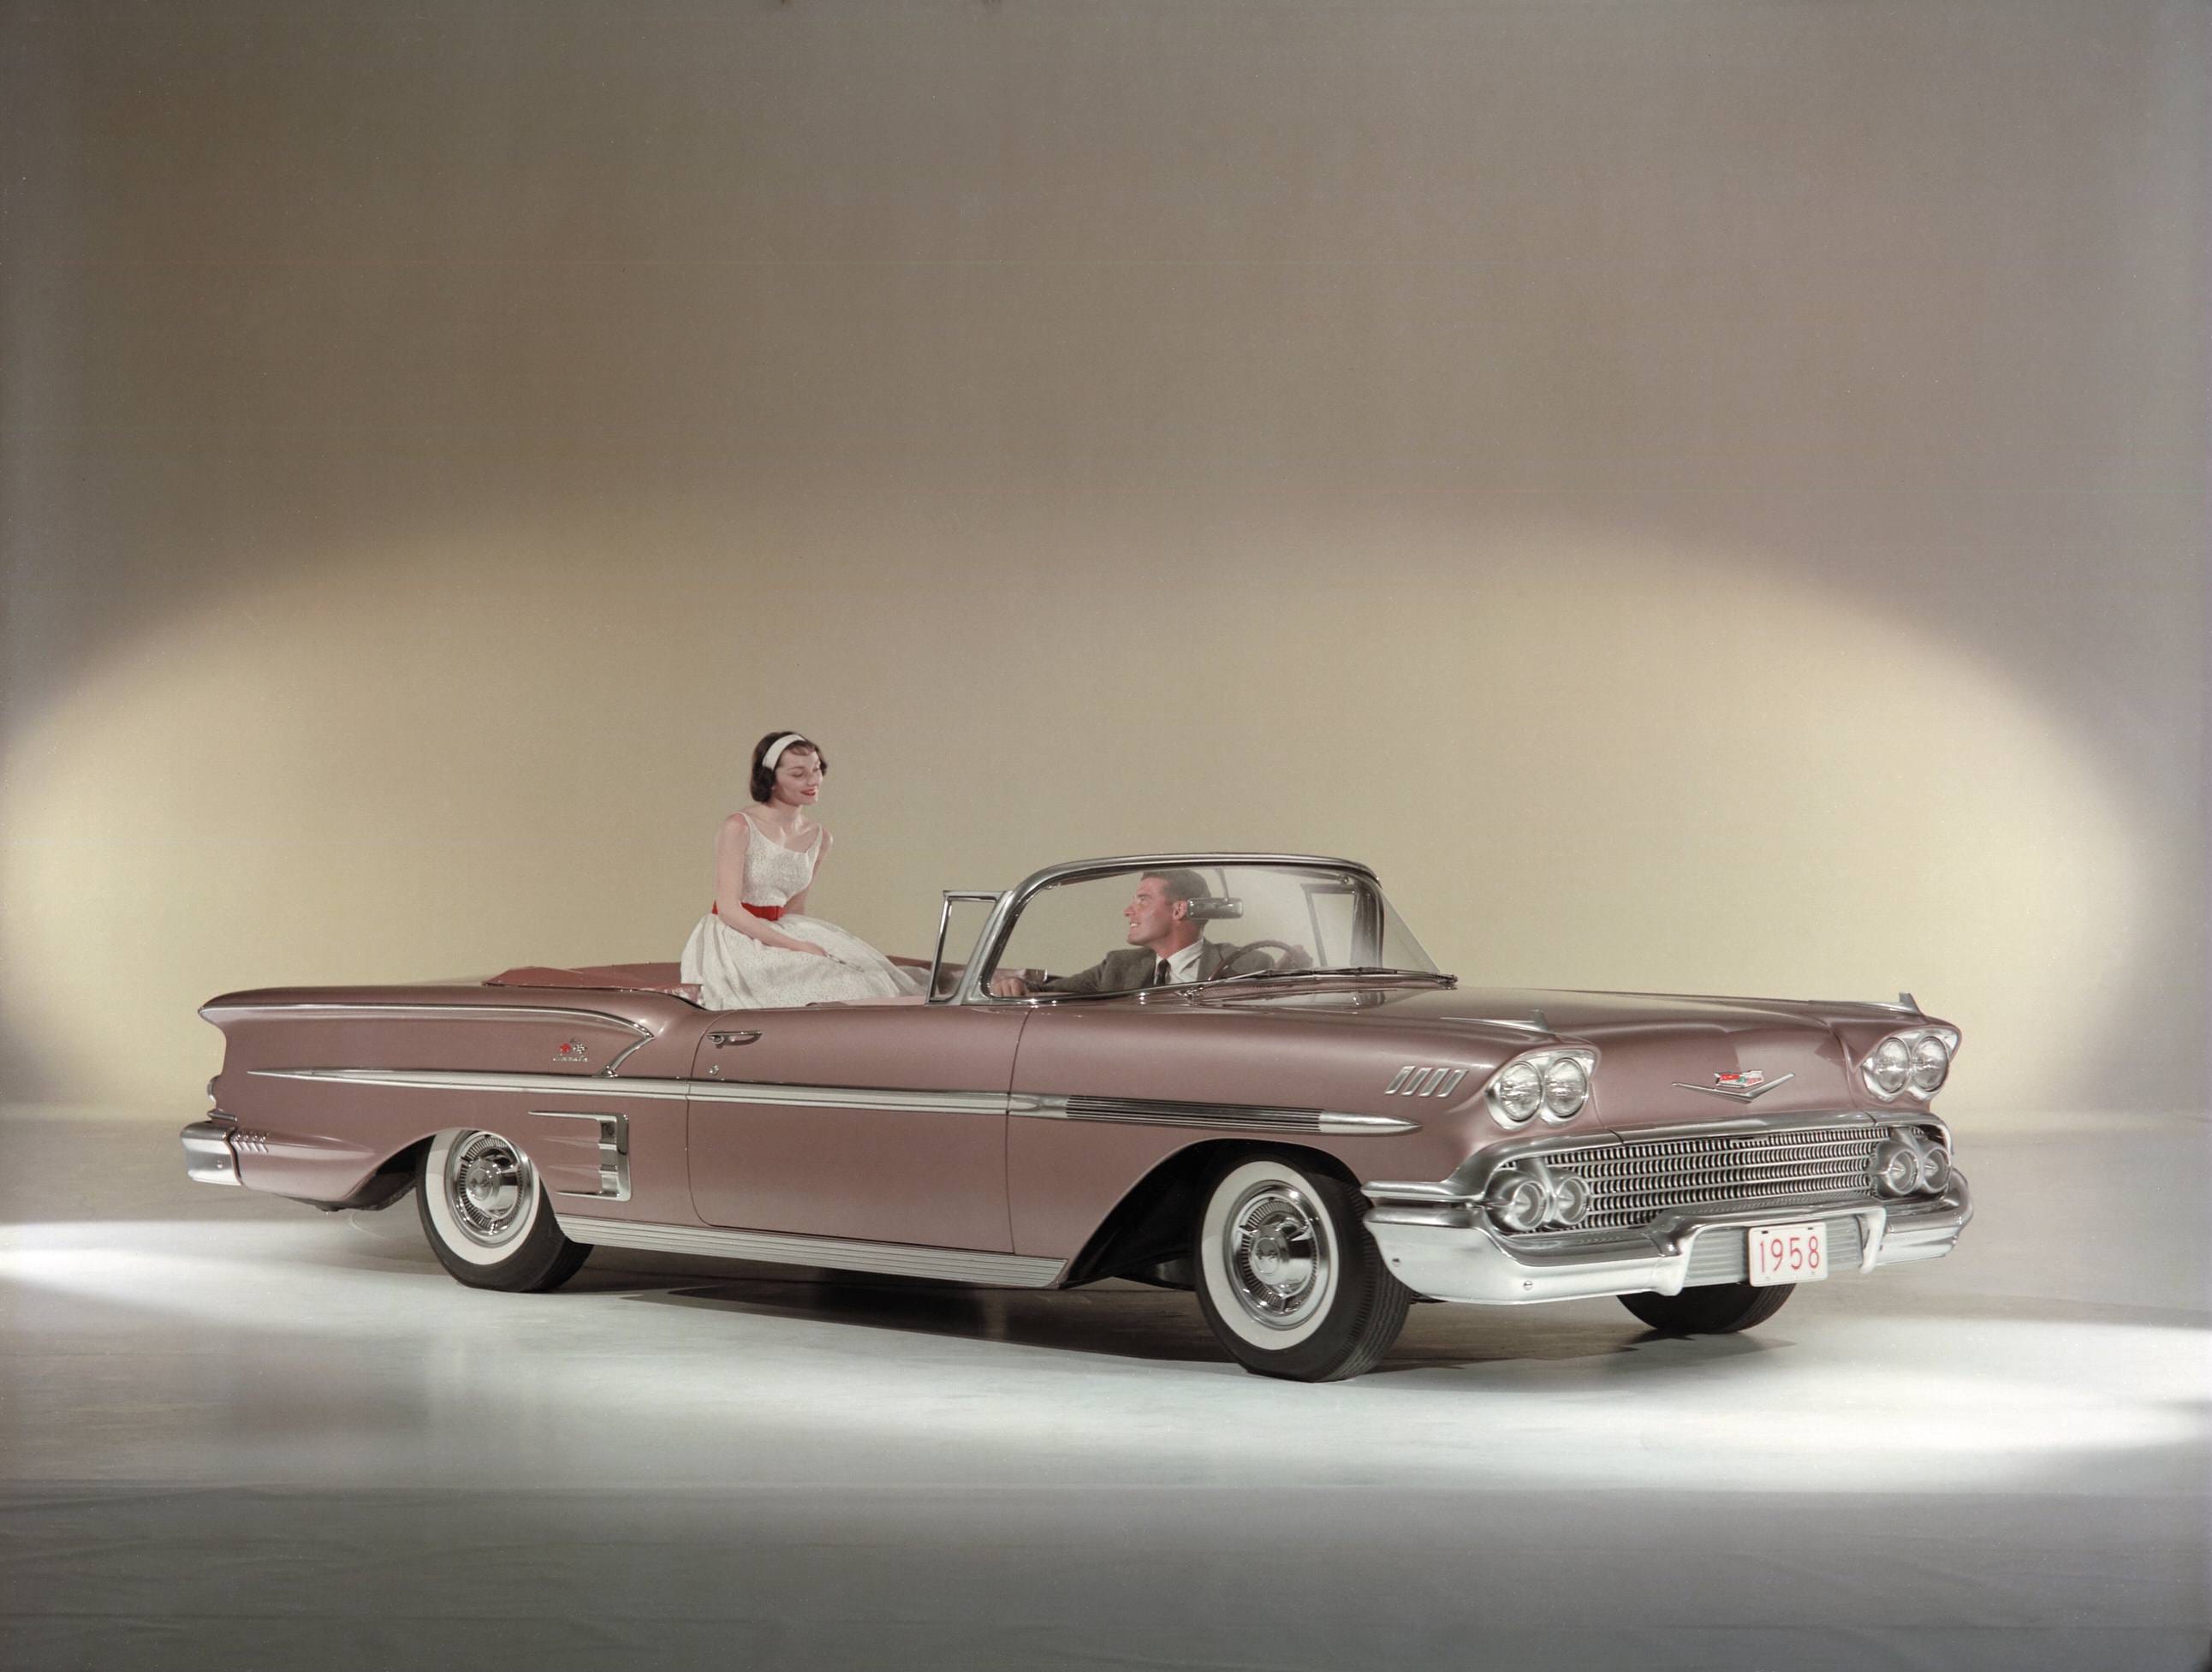 Promotional photo of a 1958 Chevrolet Impala.